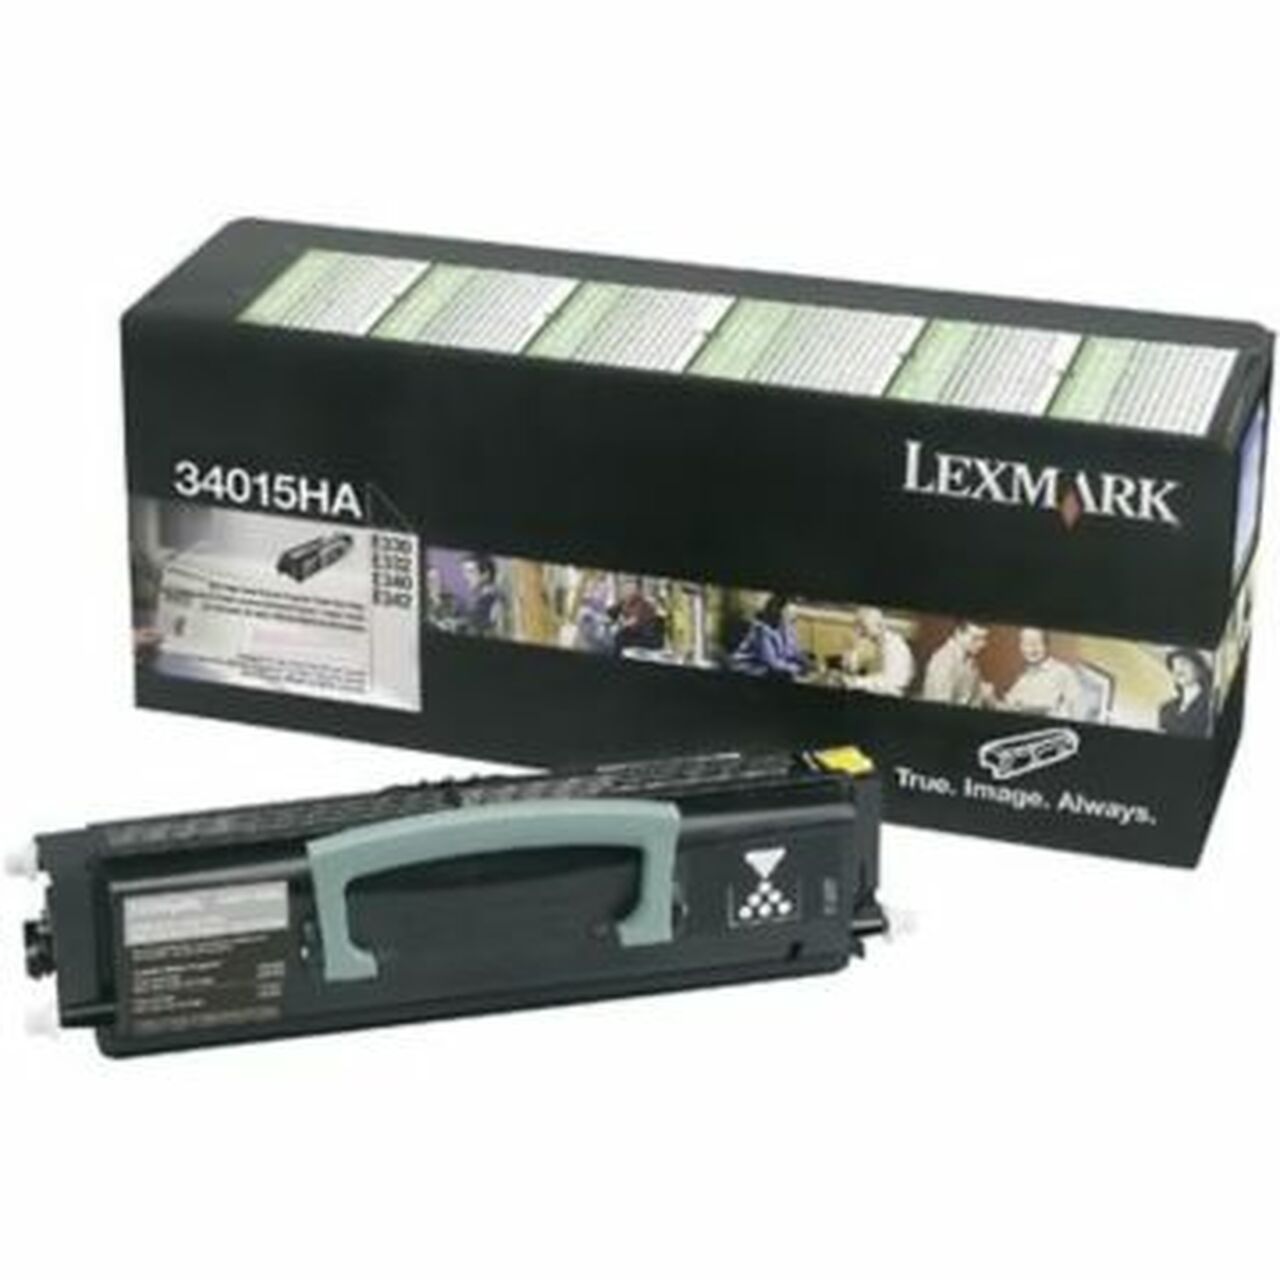 Absolute Toner Lexmark 34015HA Original OEM Black Laser Toner Cartridge Original Lexmark Cartridges